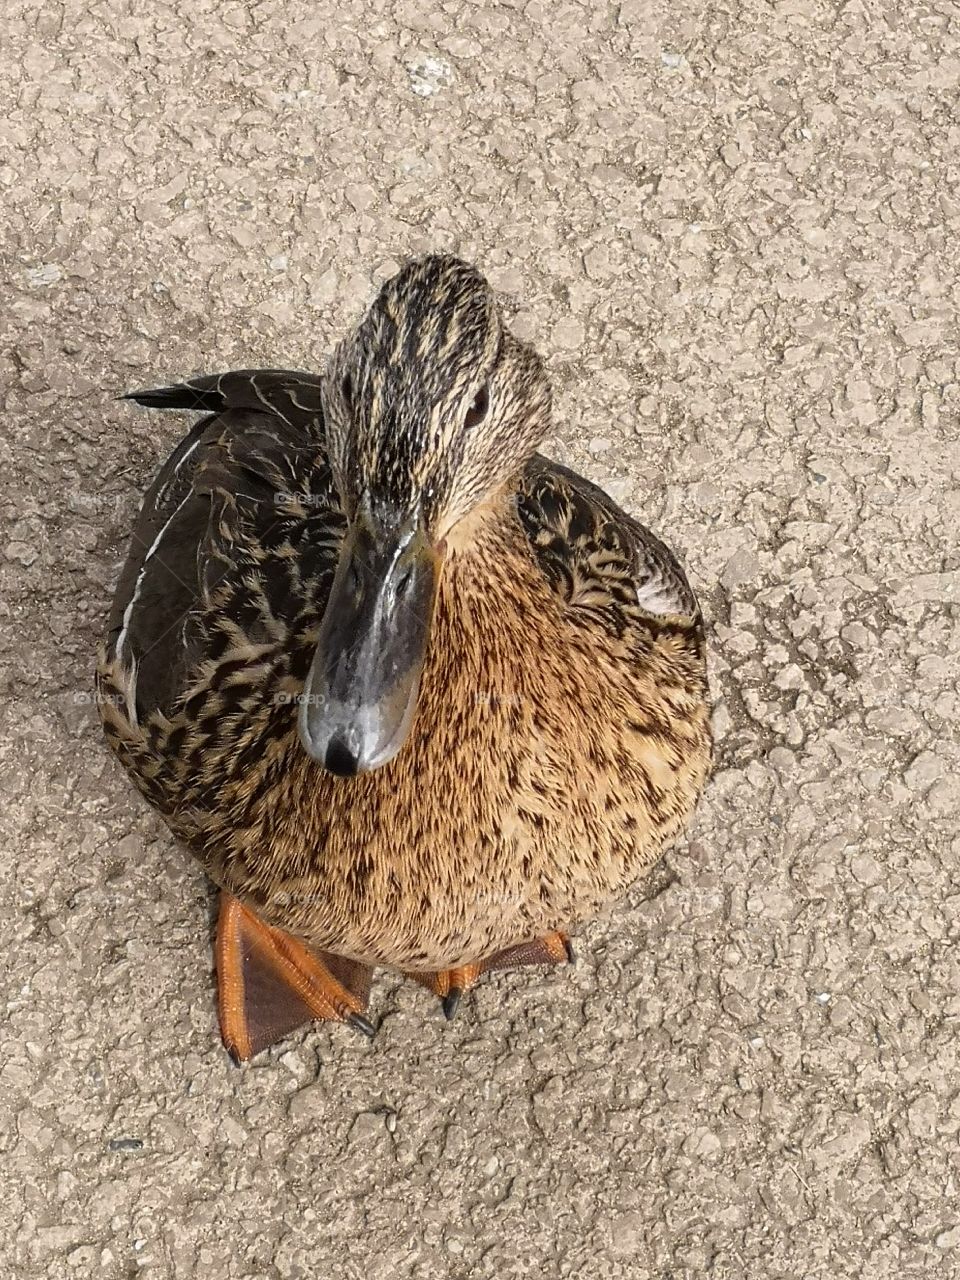 Female duck.